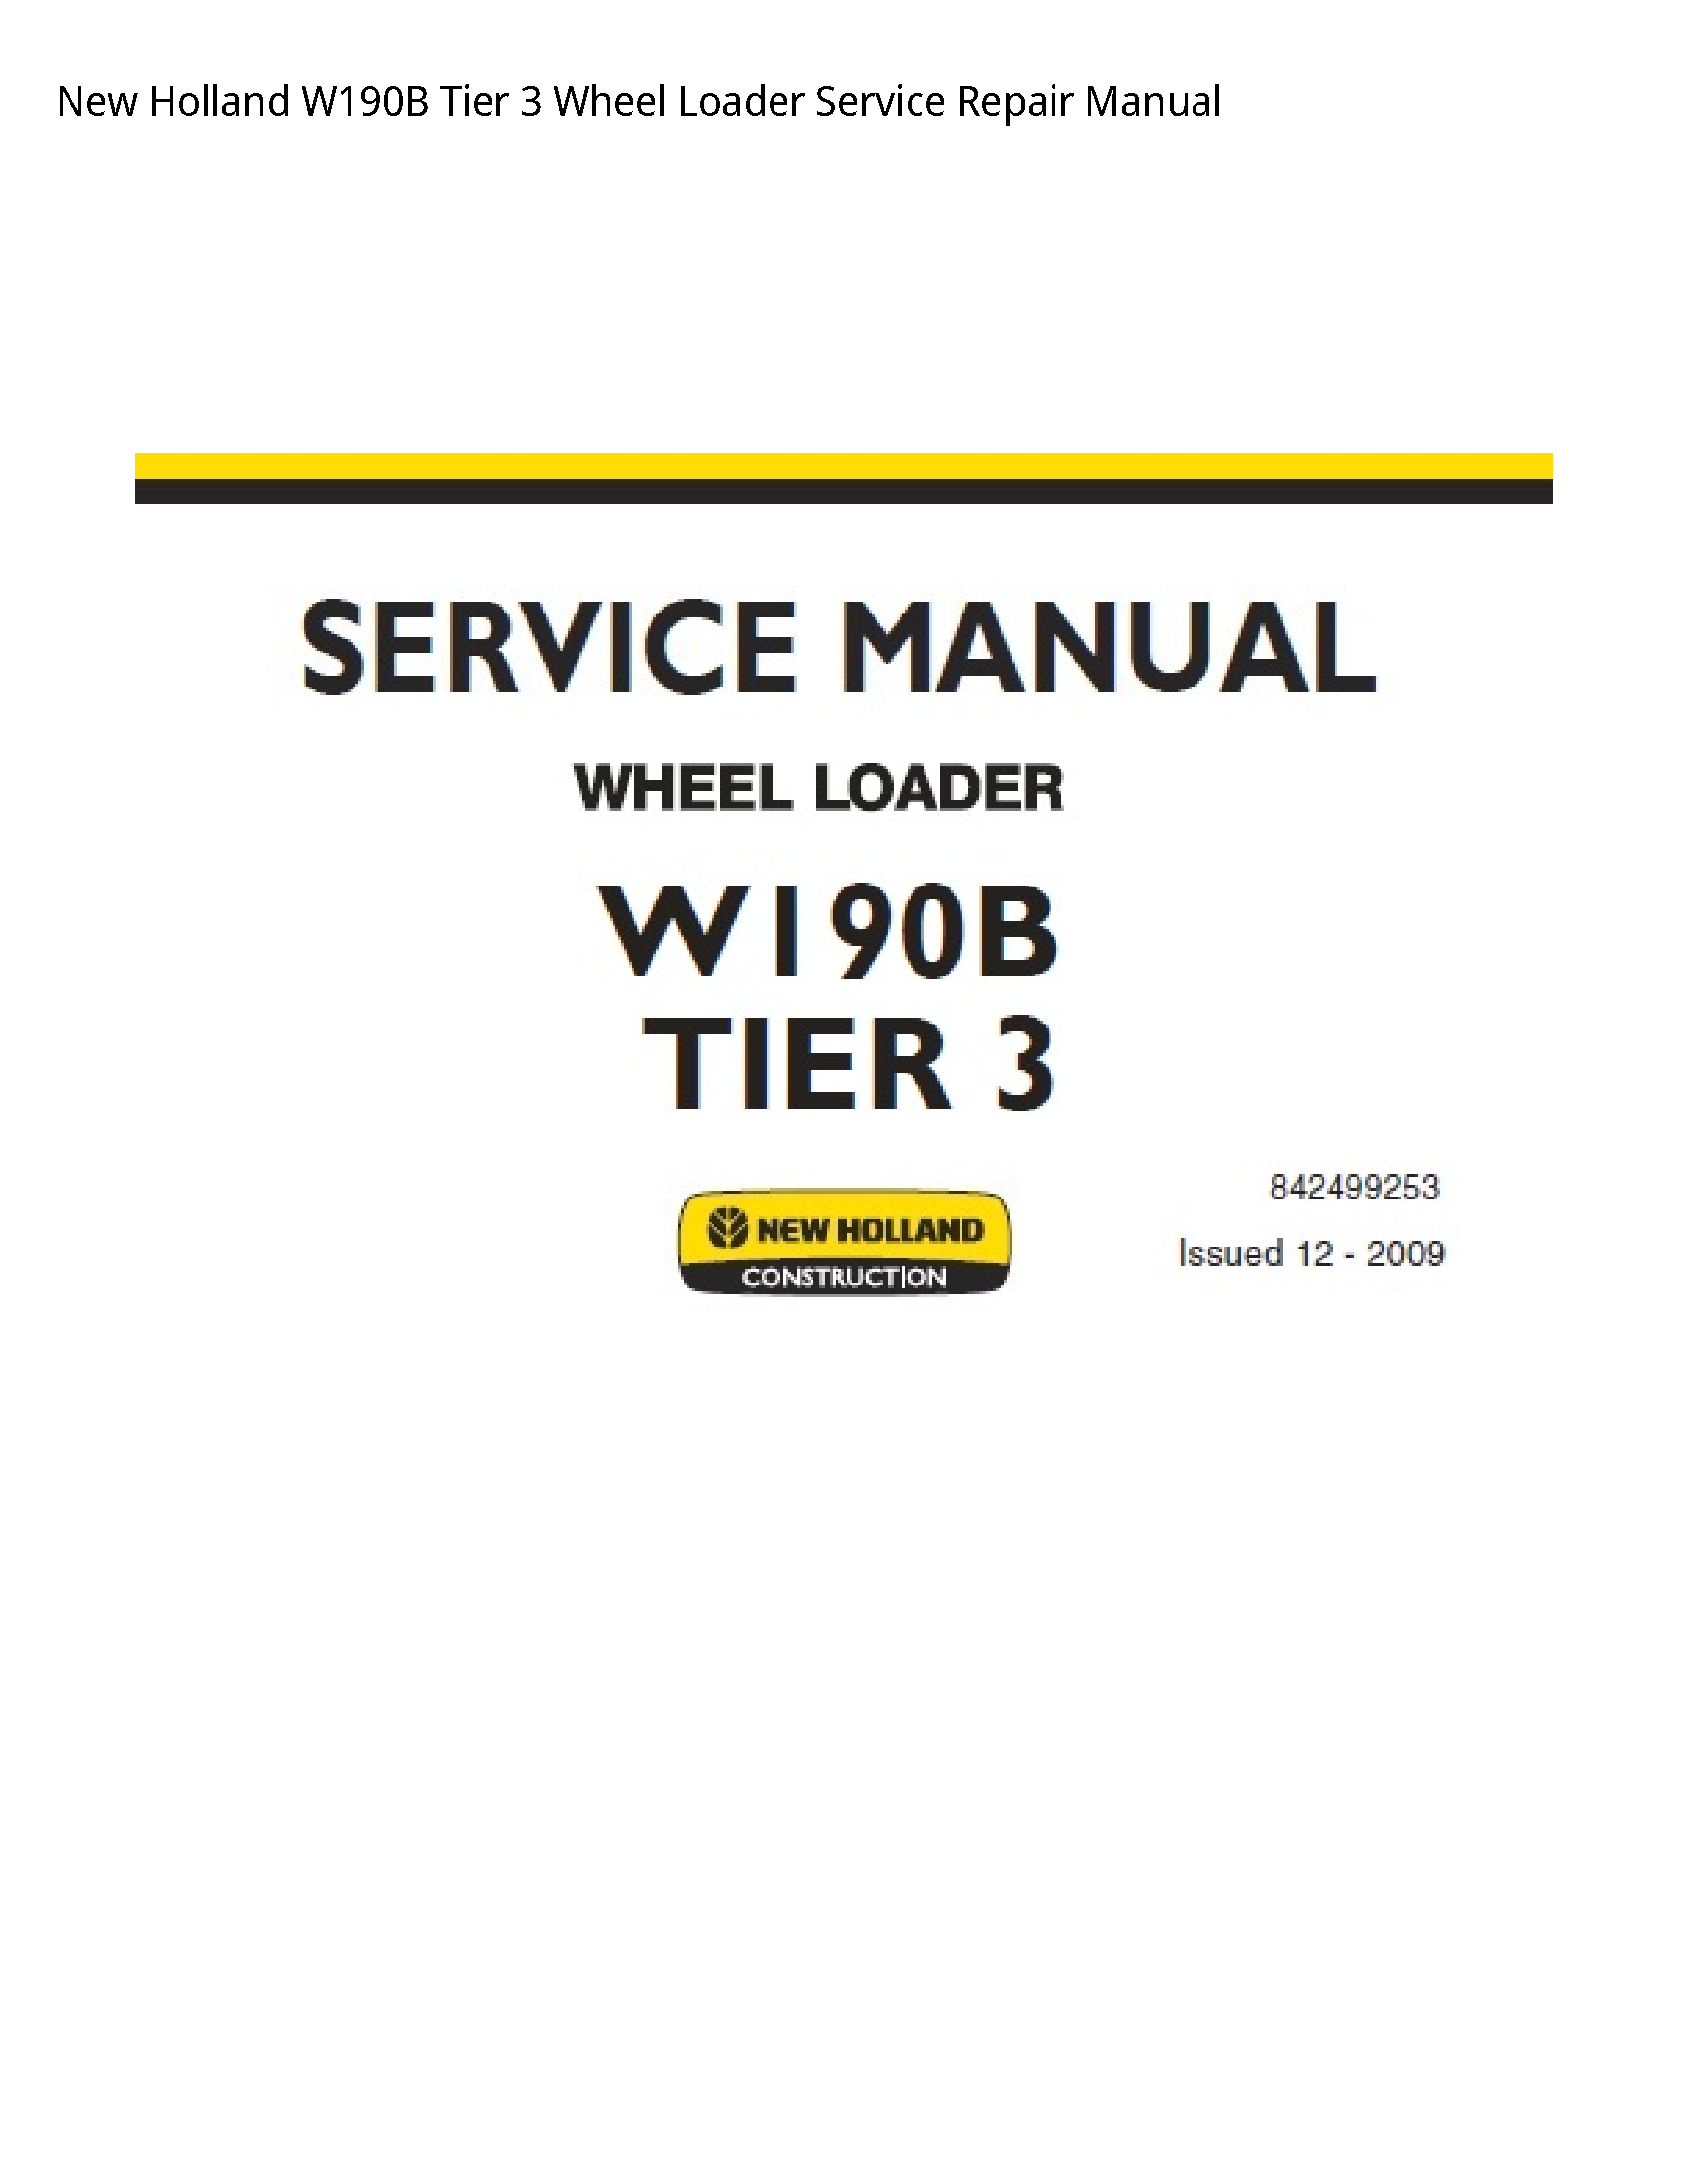 New Holland W190B Tier Wheel Loader manual